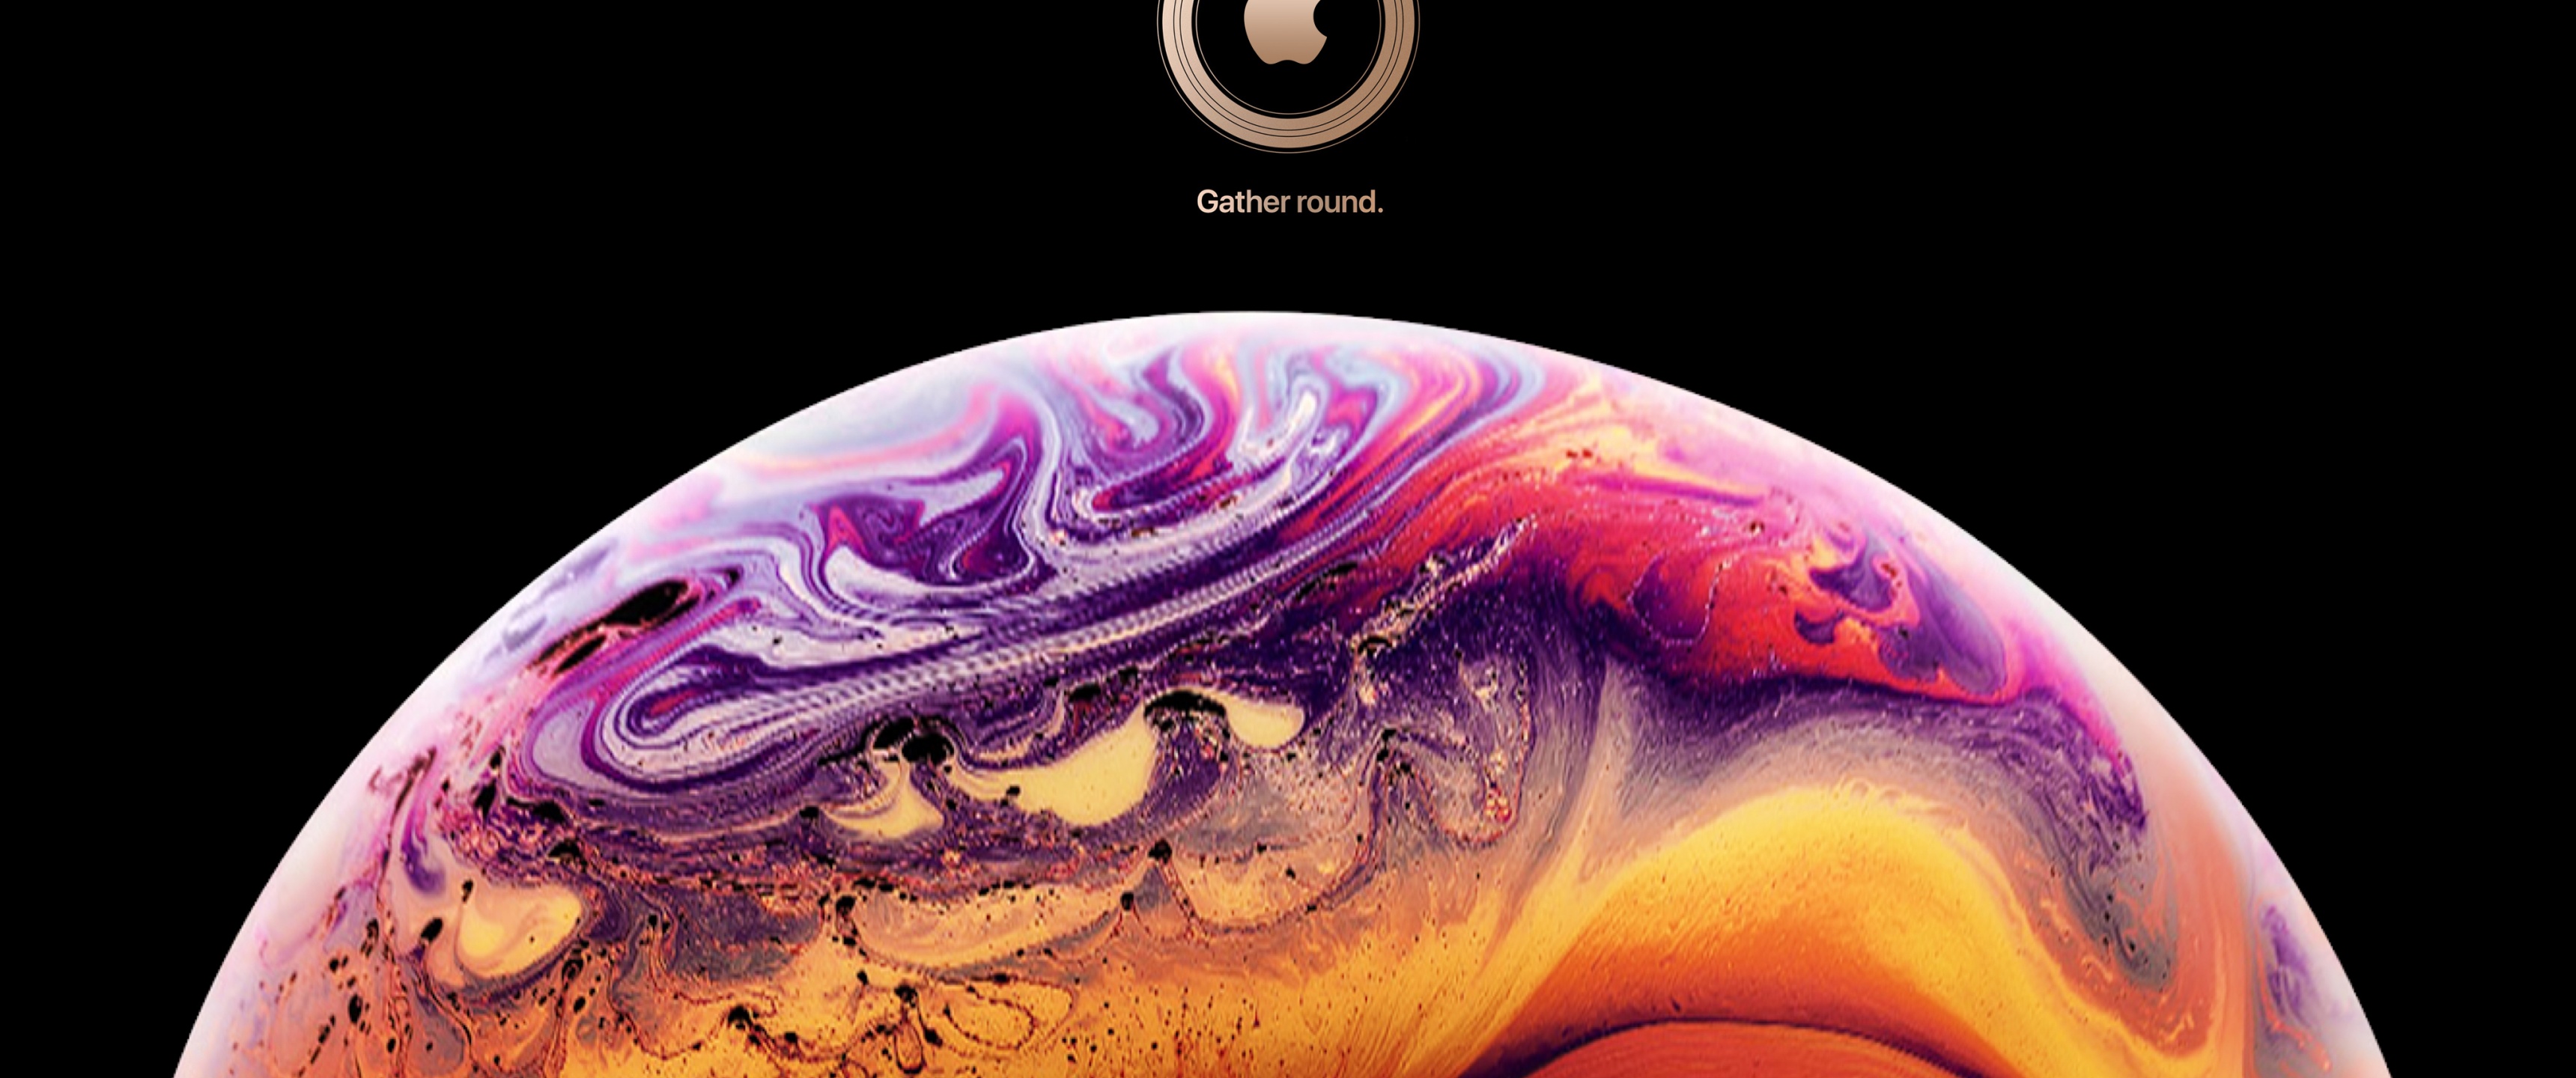 iOS 12 Wallpaper 4K, iPhone XS, Stock, Technology, #1568